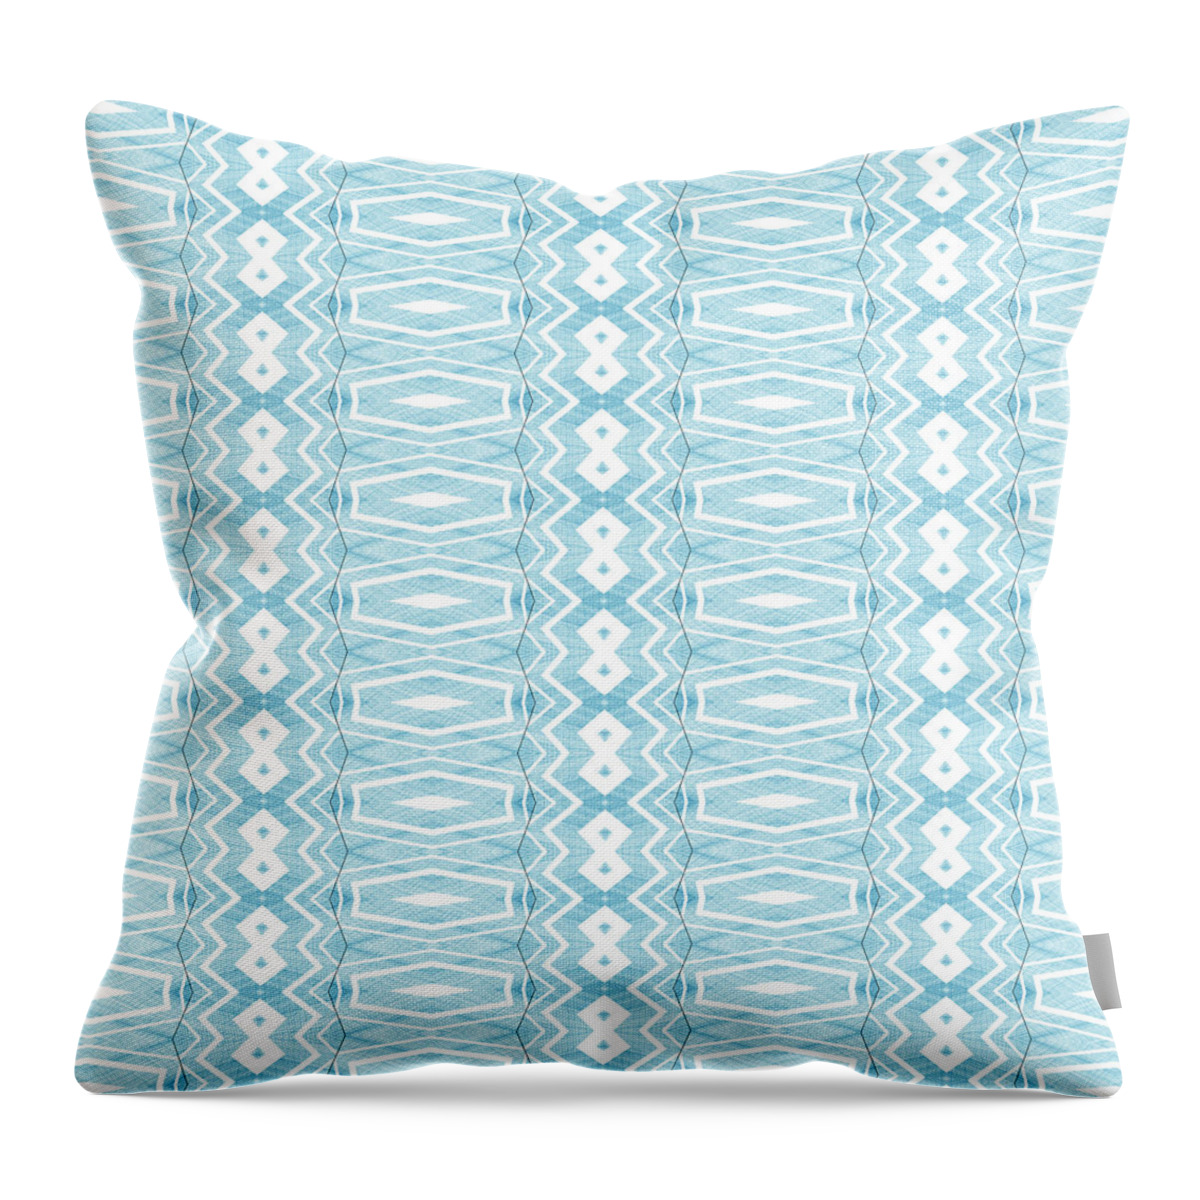 Symmetrical Throw Pillow featuring the digital art Pattern 3 by Angie Tirado